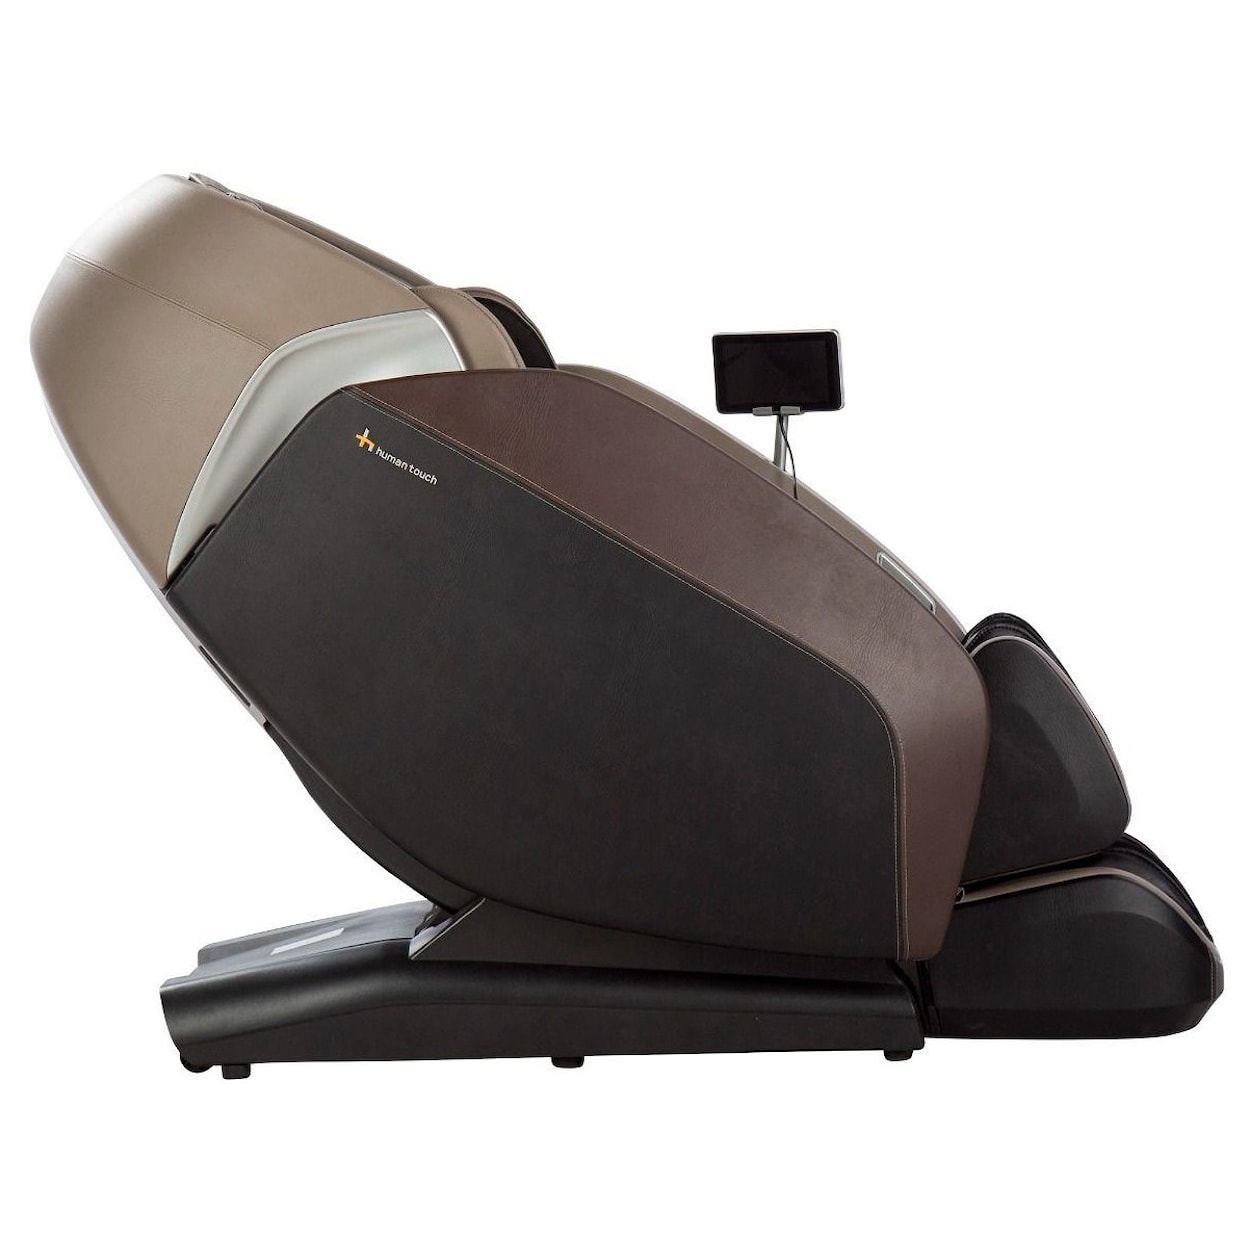 Human Touch Certus Massage Chair